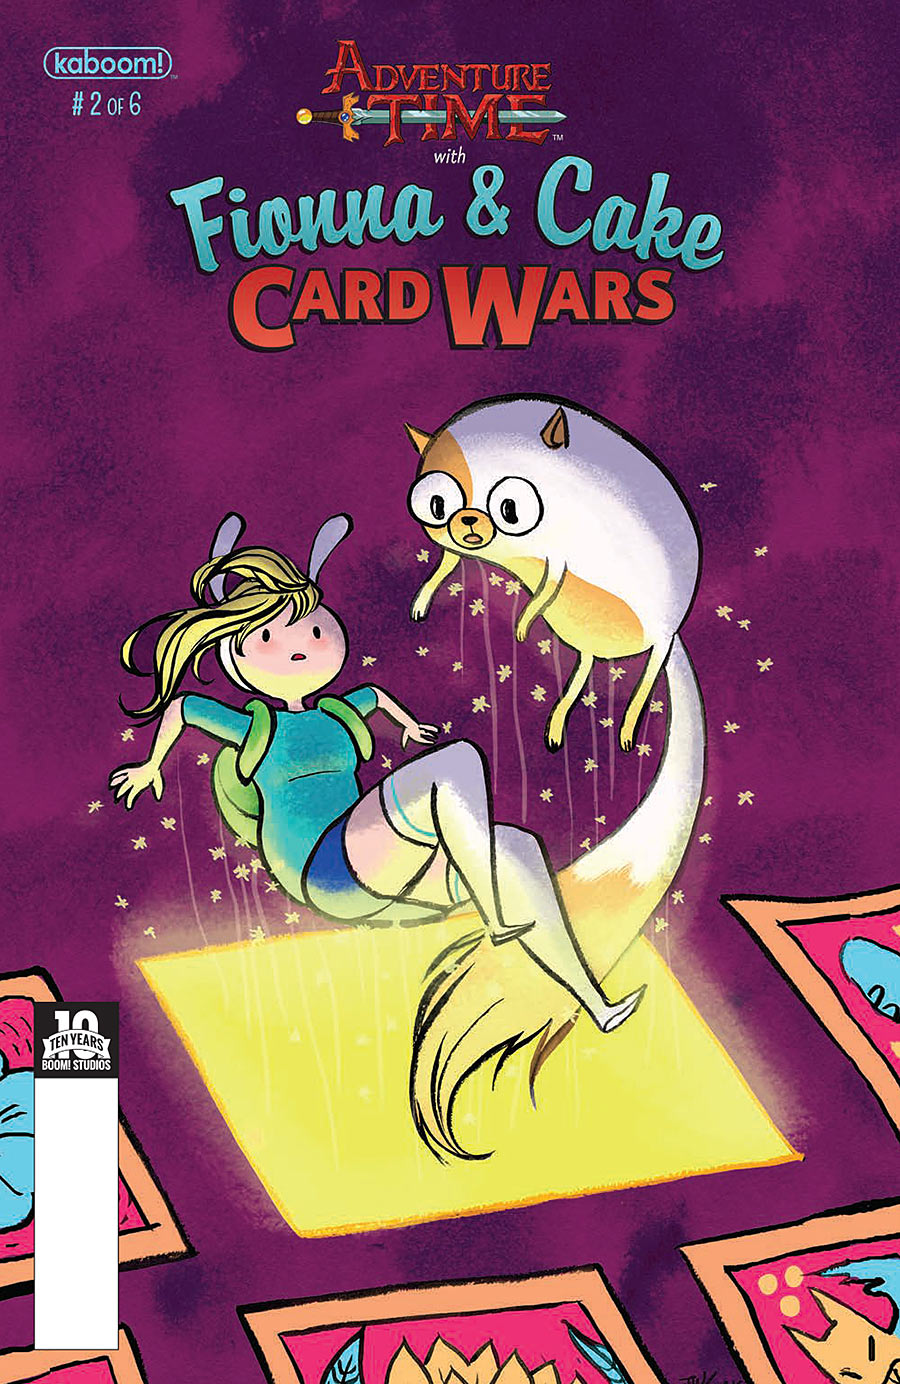 Card Wars - Wikipedia